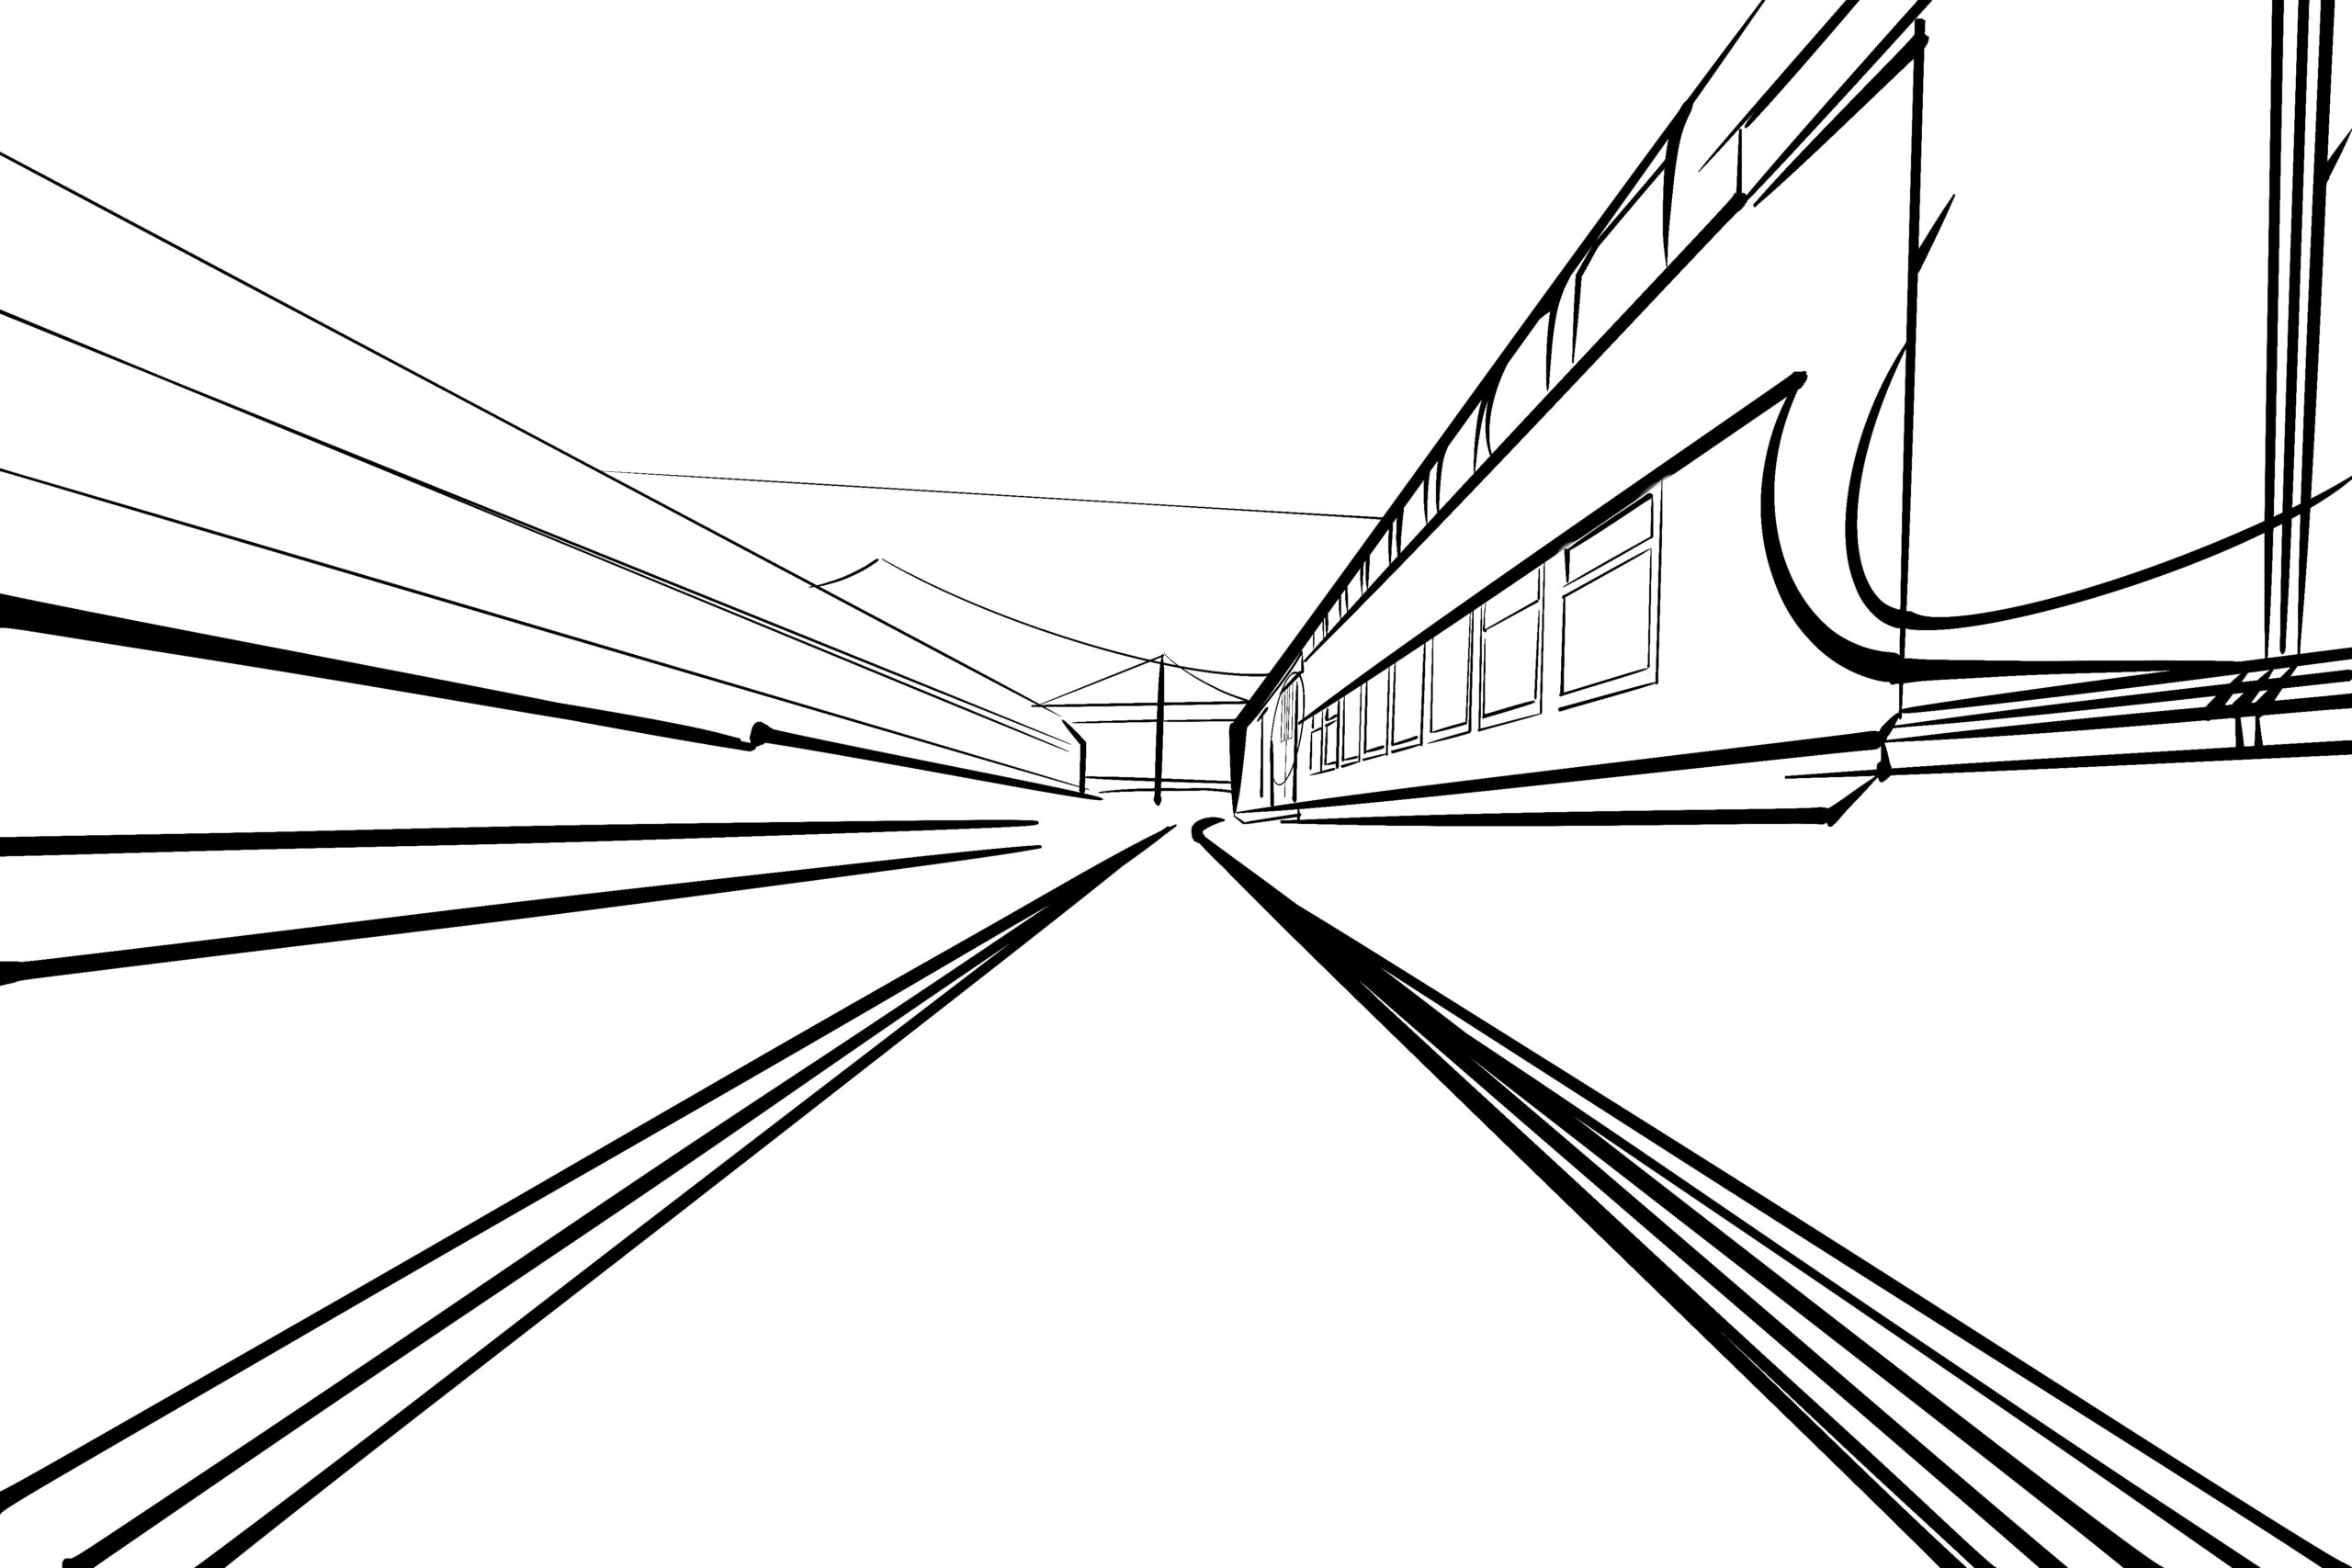 Procreate Vanishing Point Perspective Progress Sketch 1